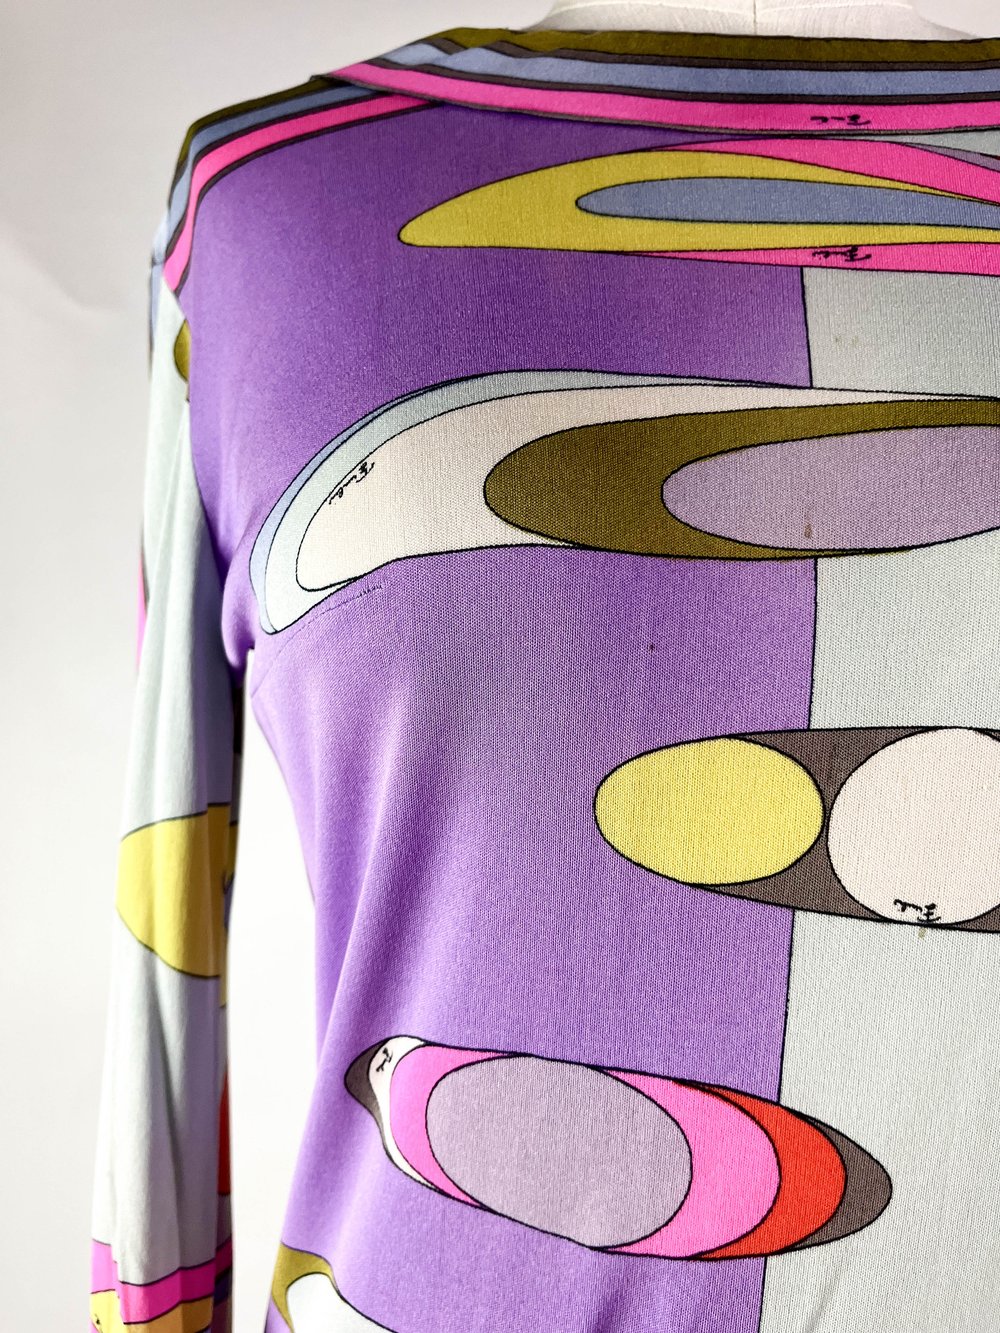 Emilio Pucci 60s Atomic Op Art Print Velvet Dress – THE WAY WE WORE